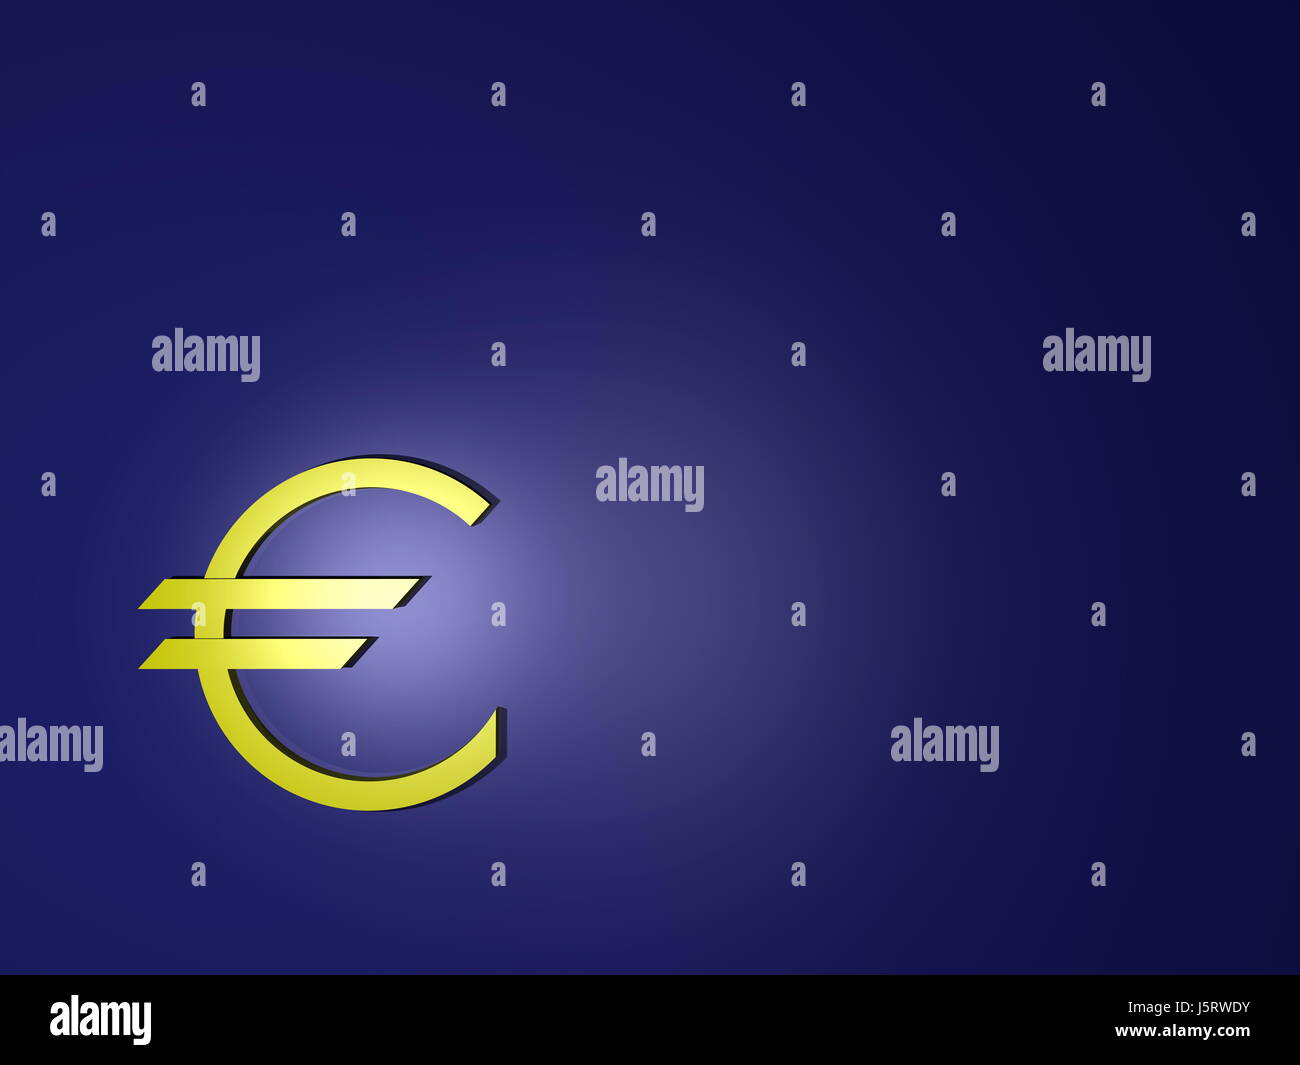 Melden Sie Signal Währung Euro Europa Reform Umgang viel B2B Stockfoto